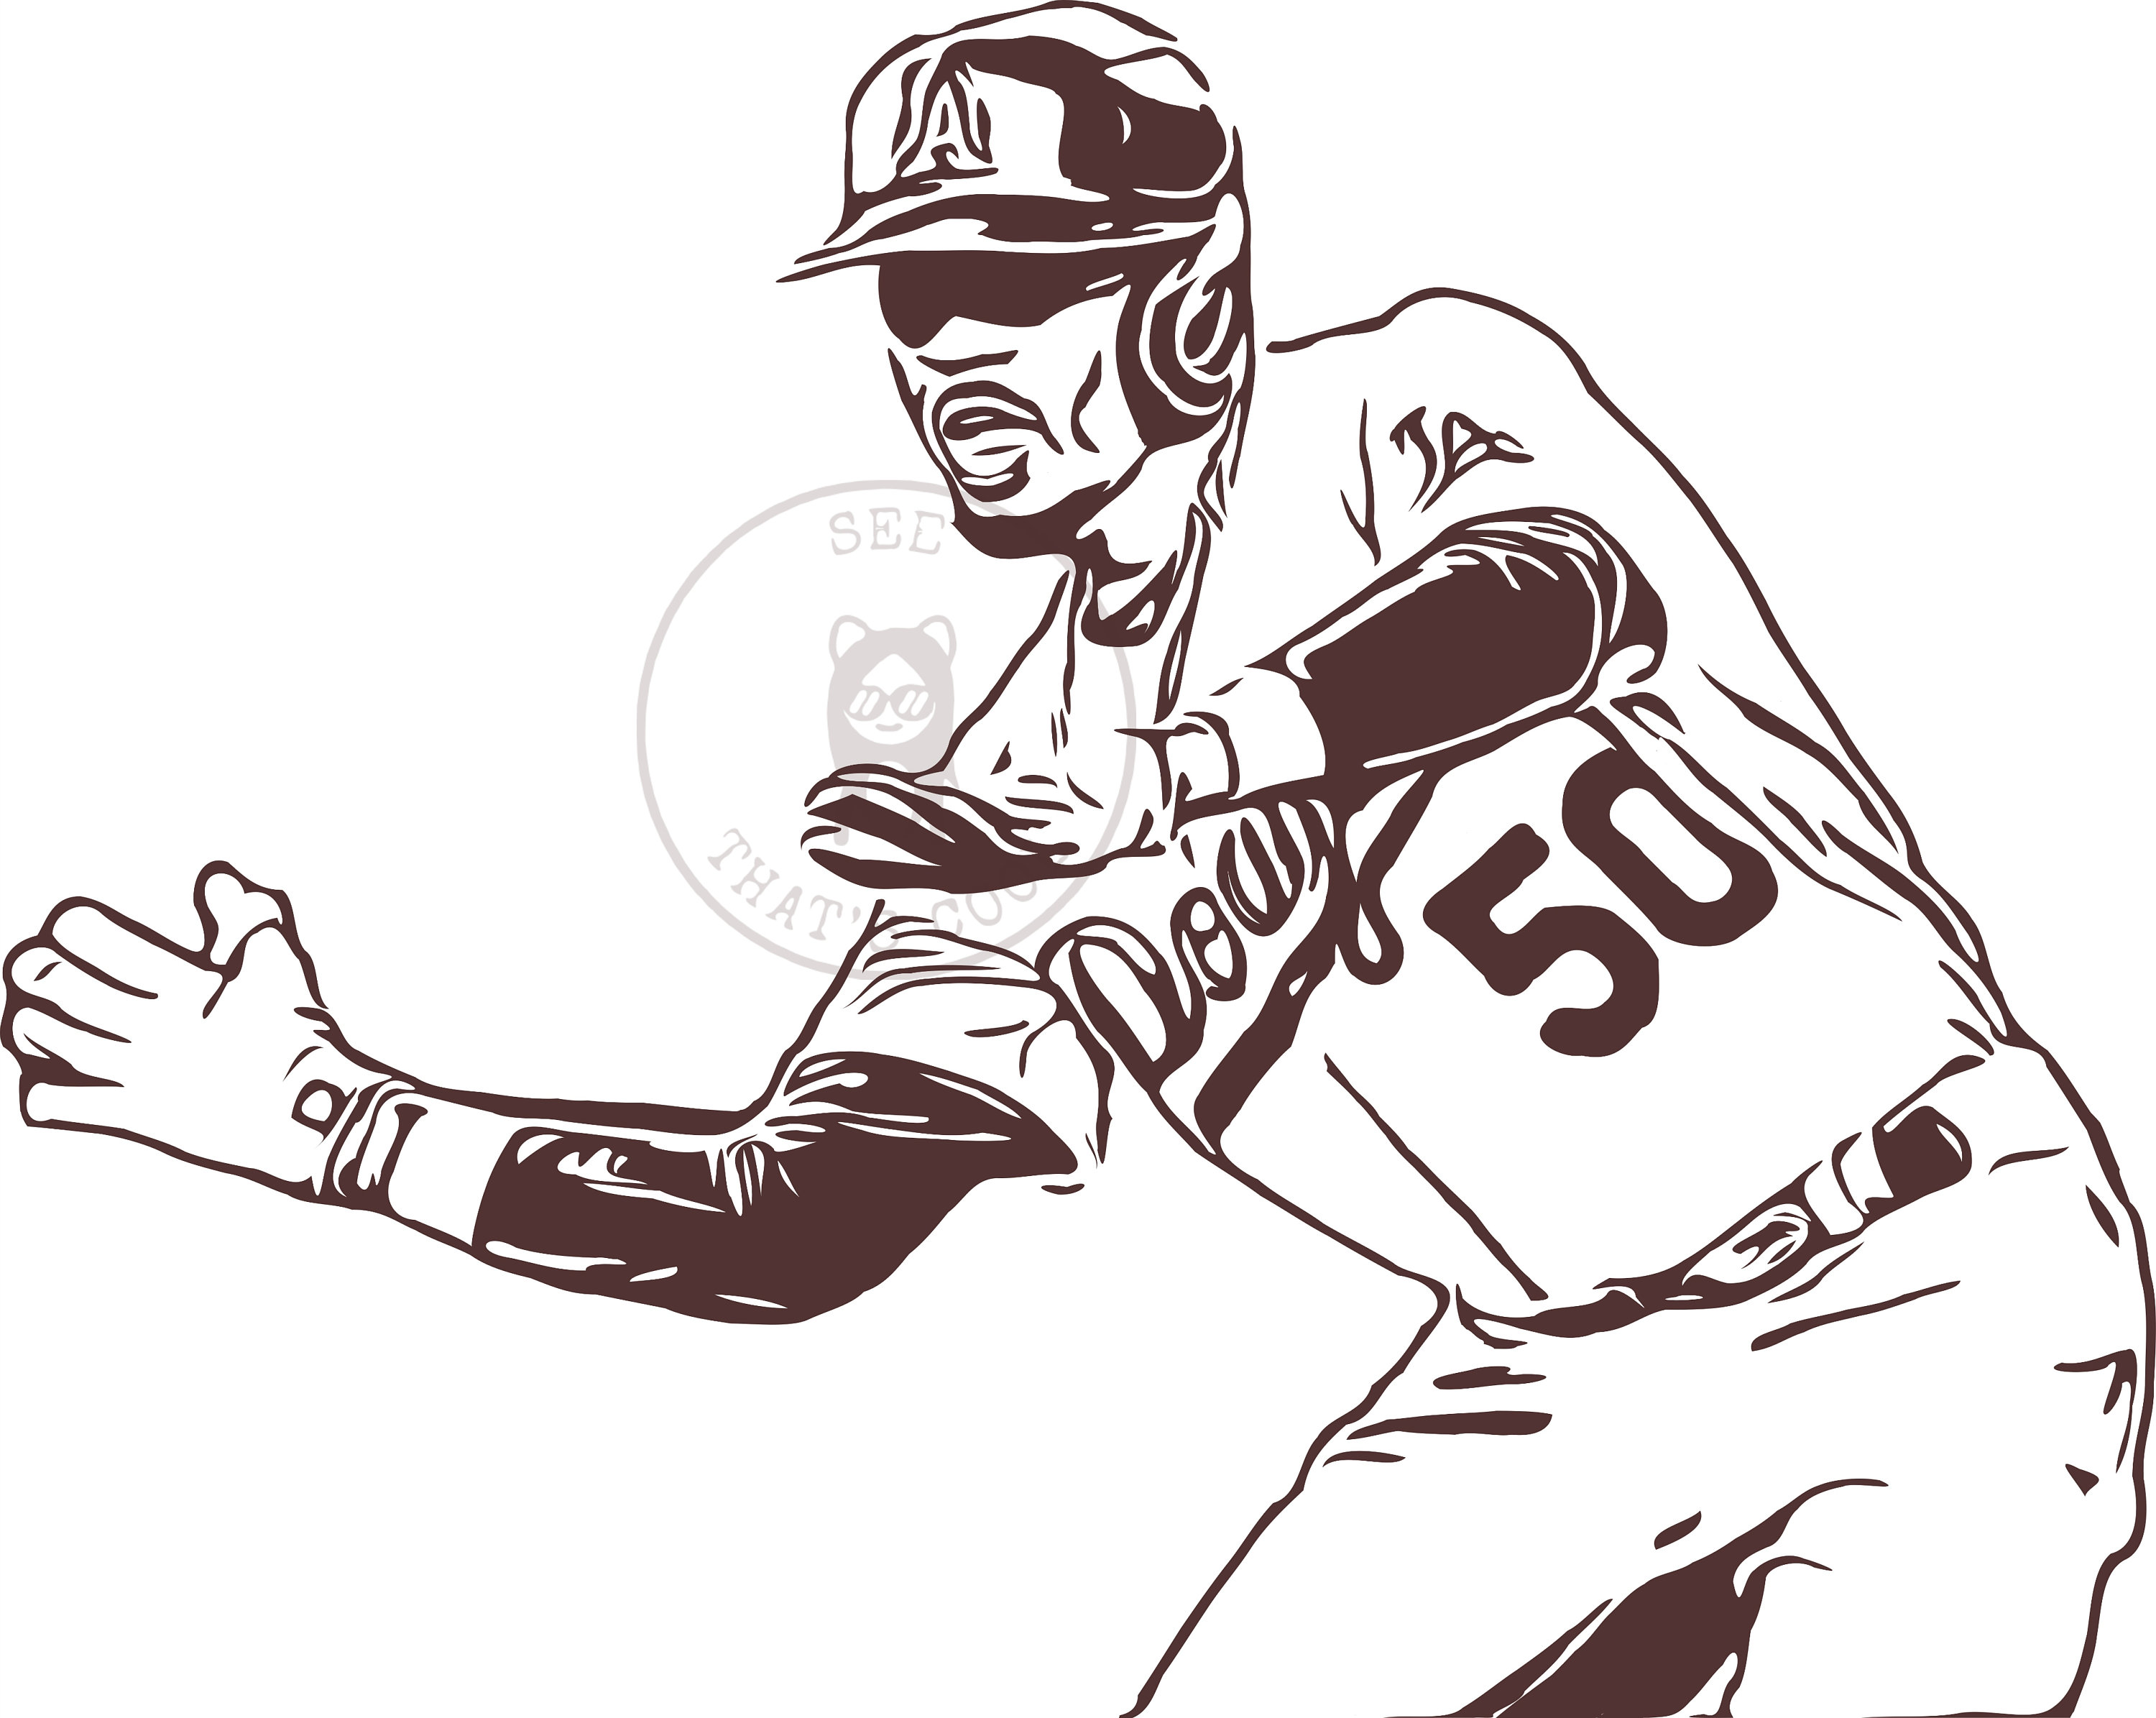 Mookie Betts - Red Sox RF  Illustration, Humanoid sketch, Mookie betts